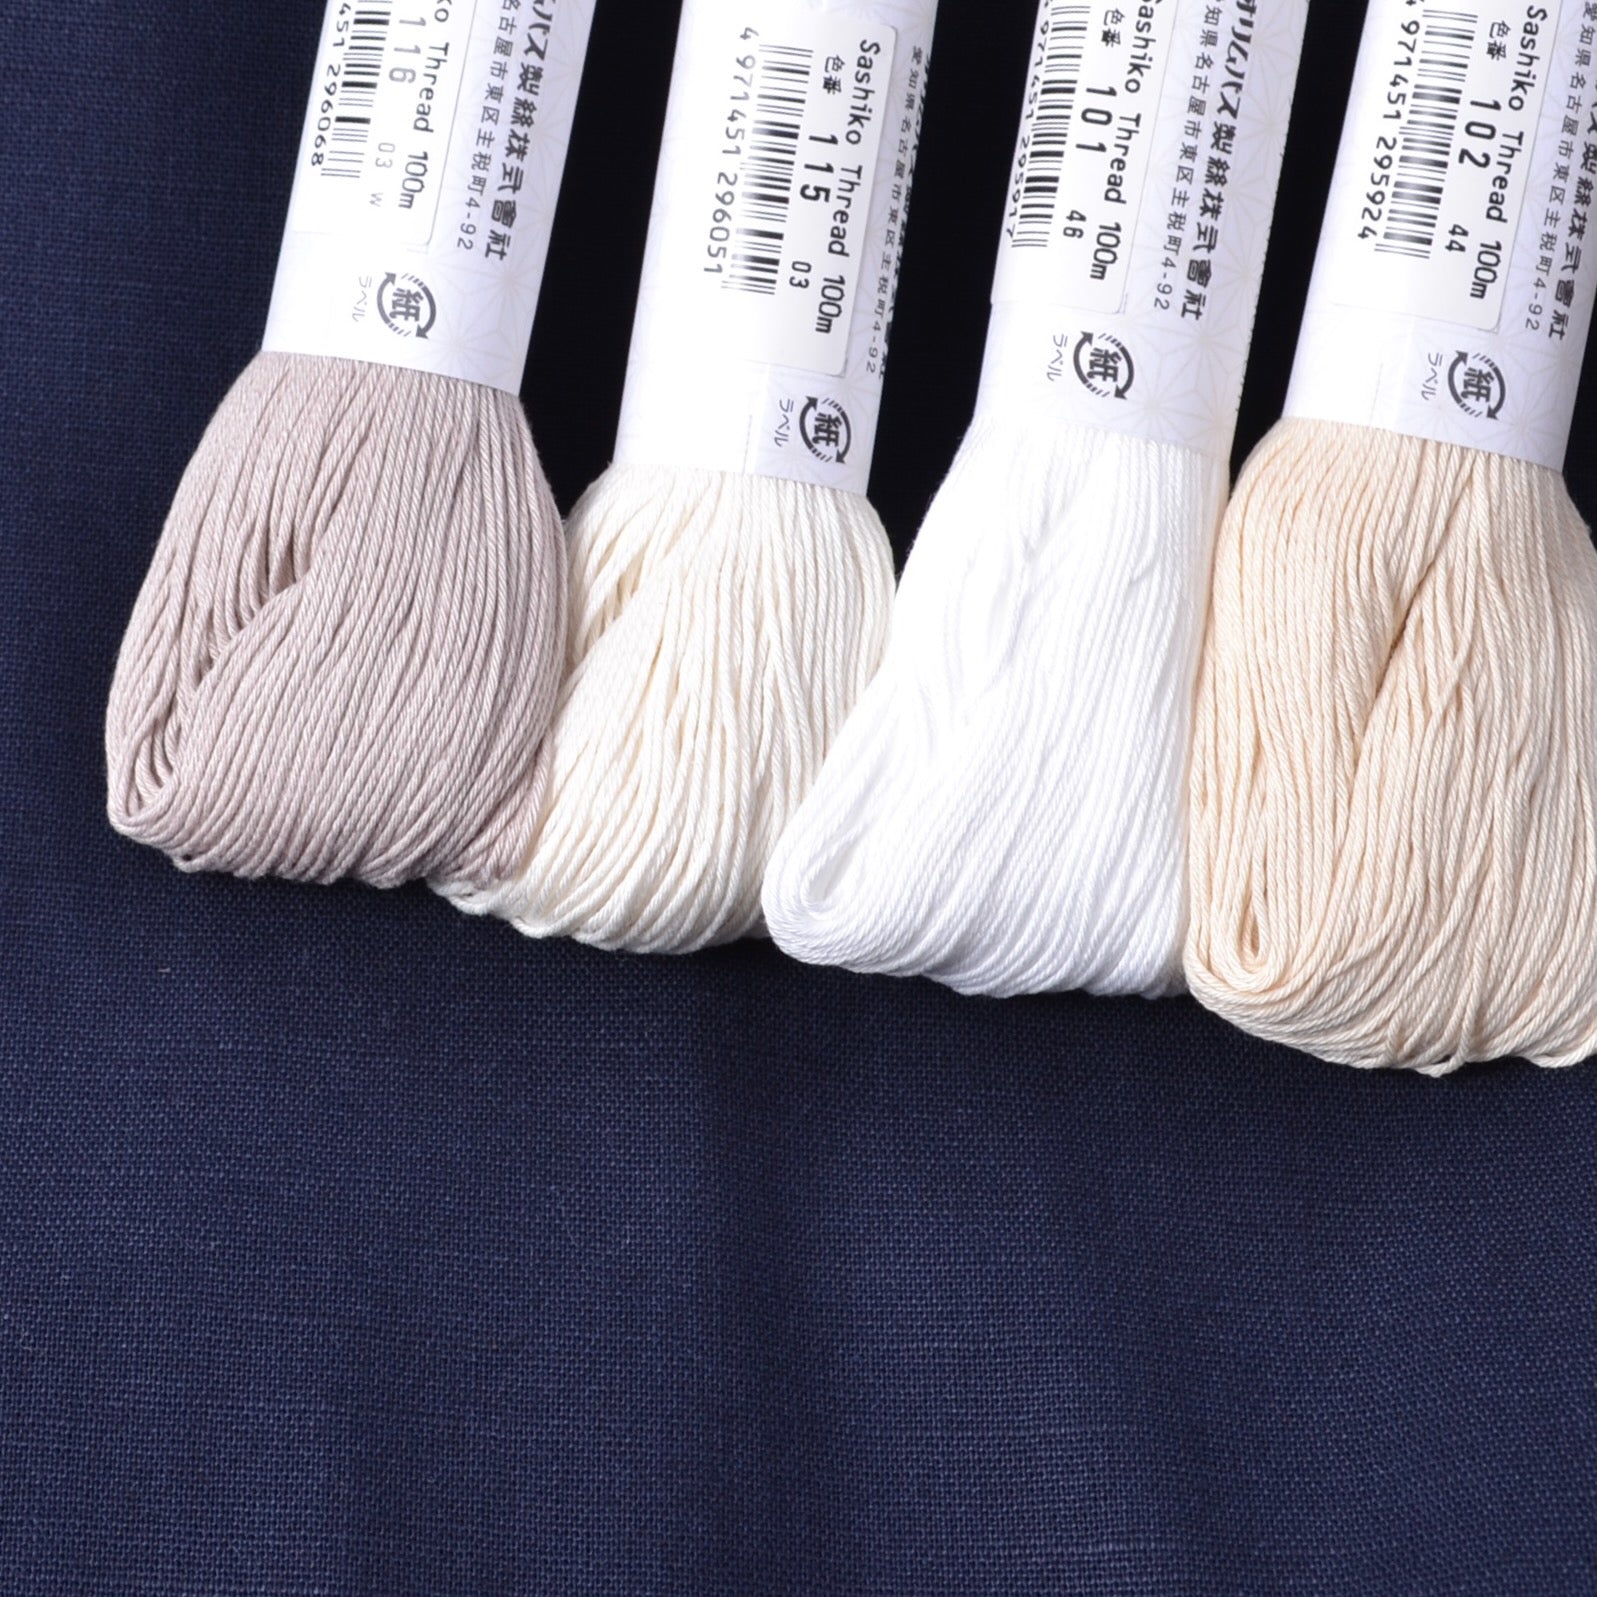 Cotton Fabric for Sashiko Stitching, Medium Blue